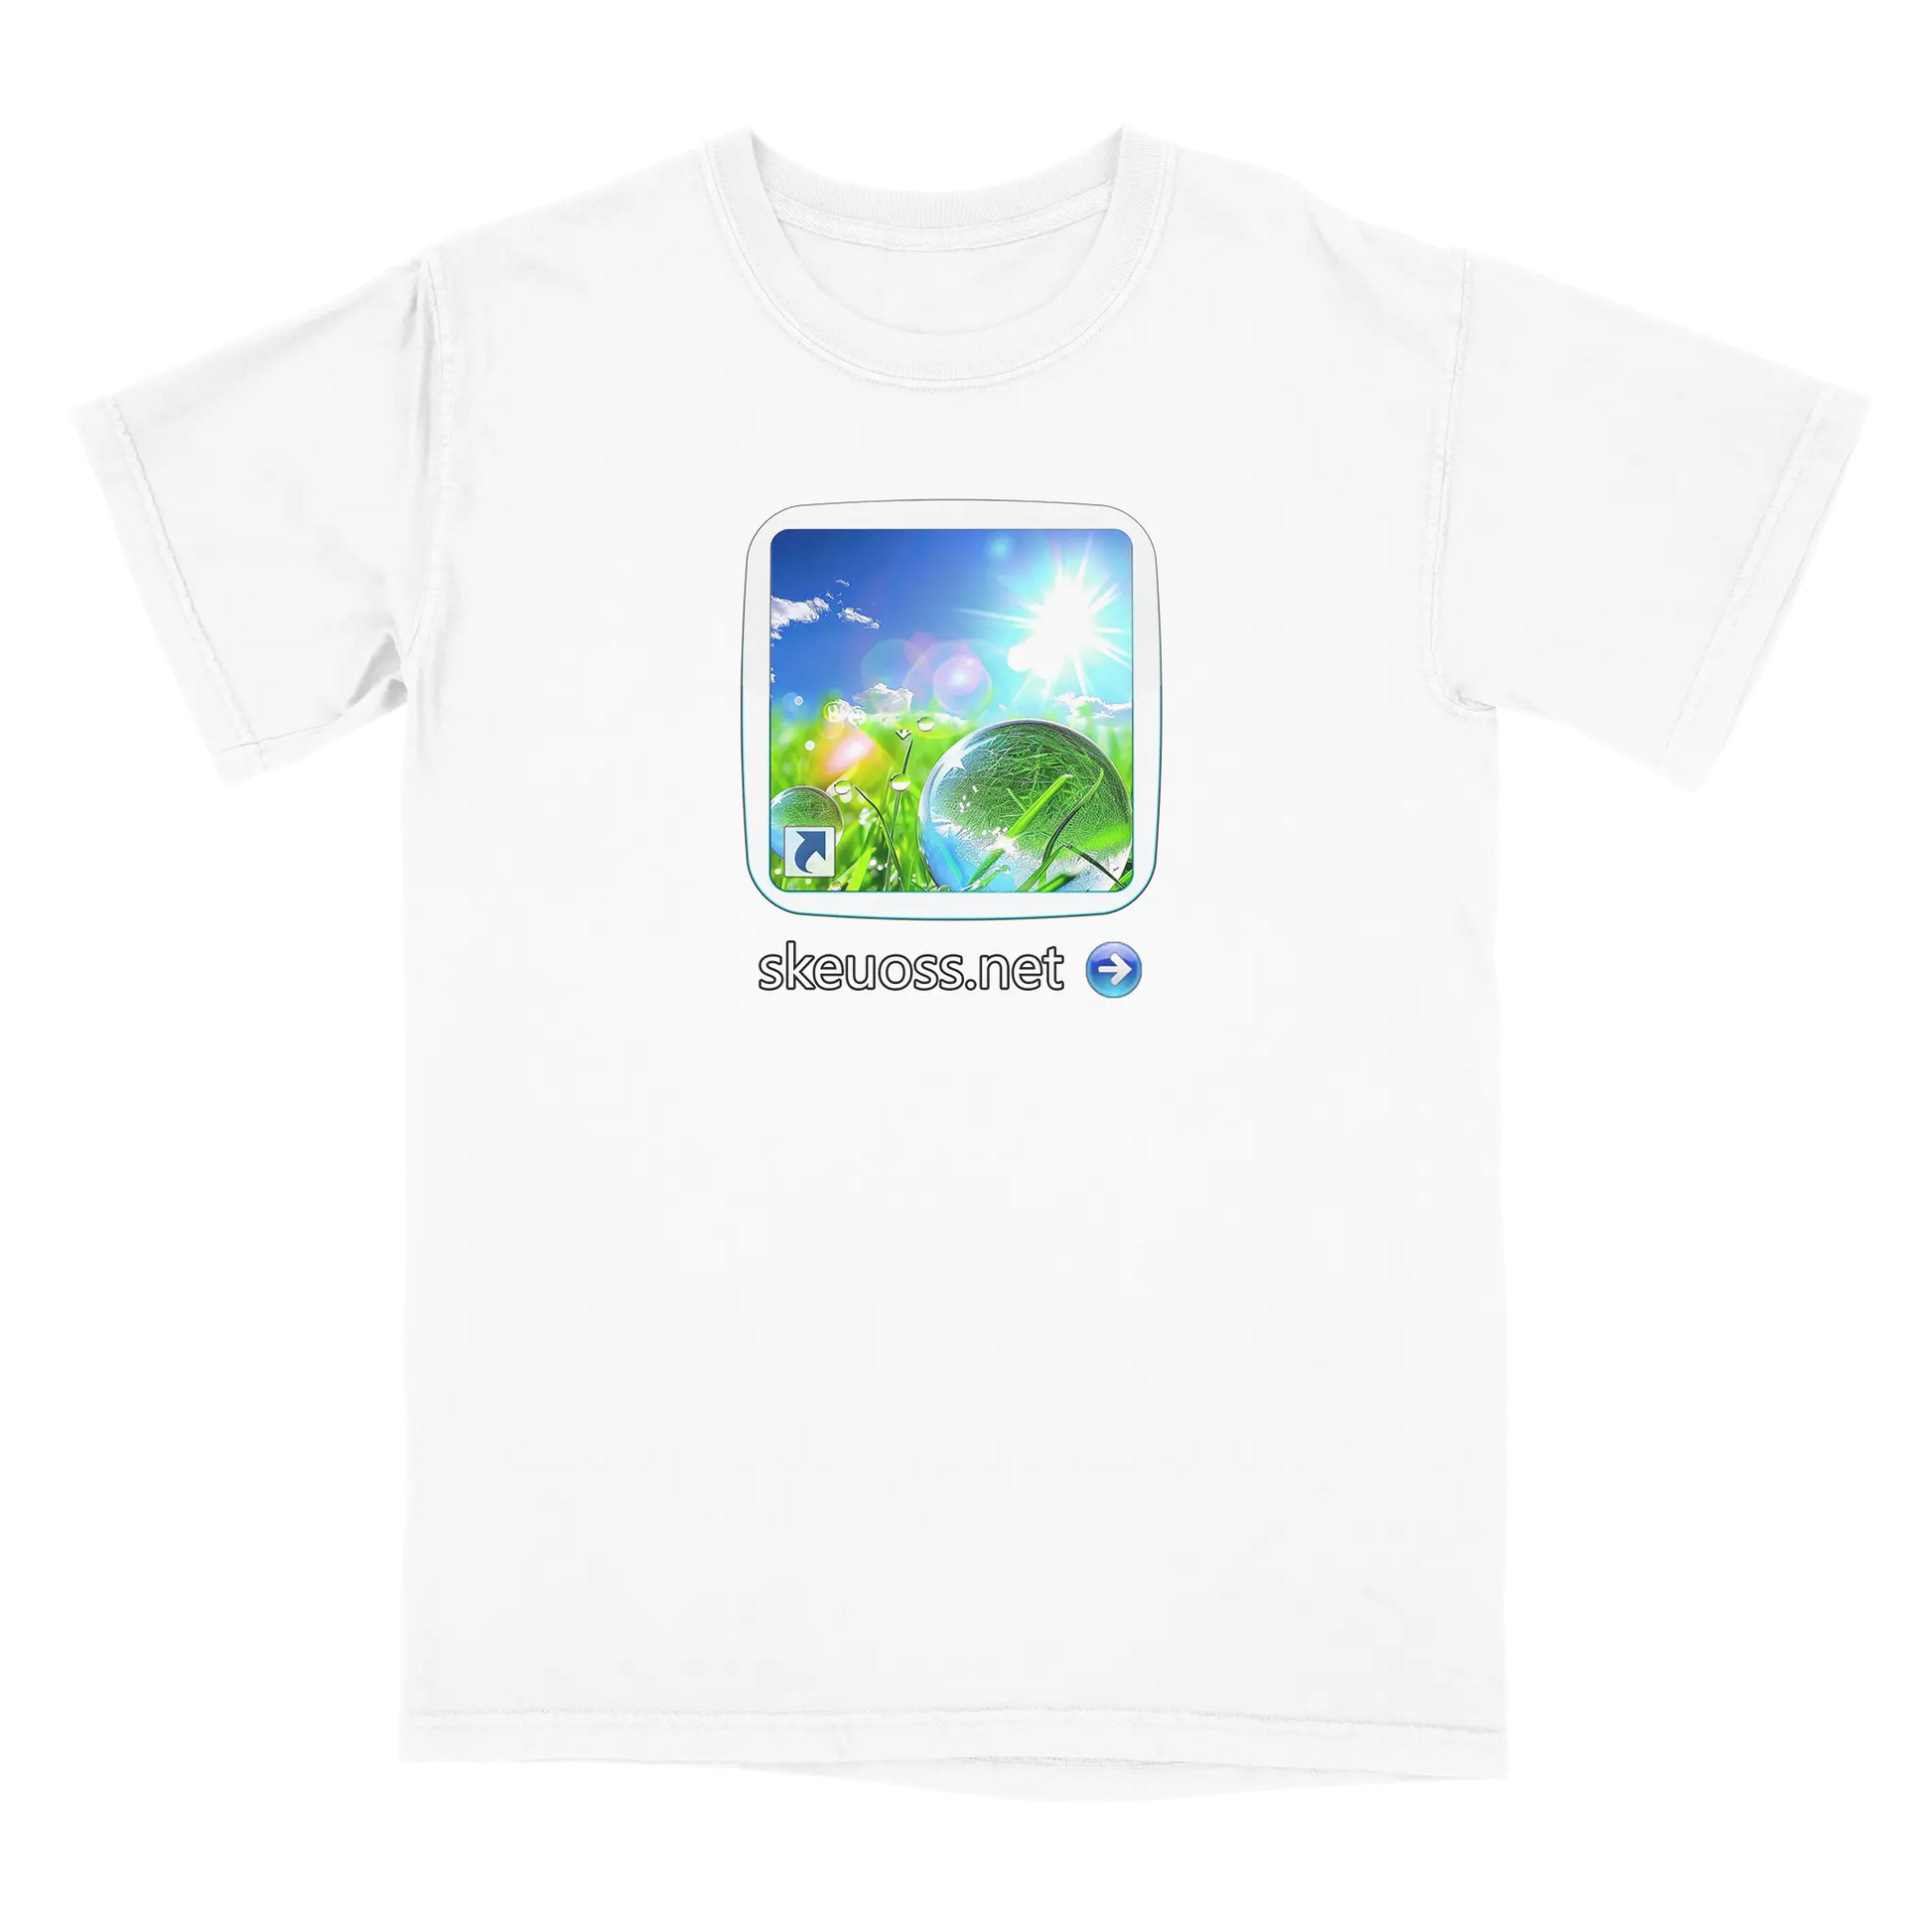 Frutiger Aero T-shirt - User Login Collection - User 259